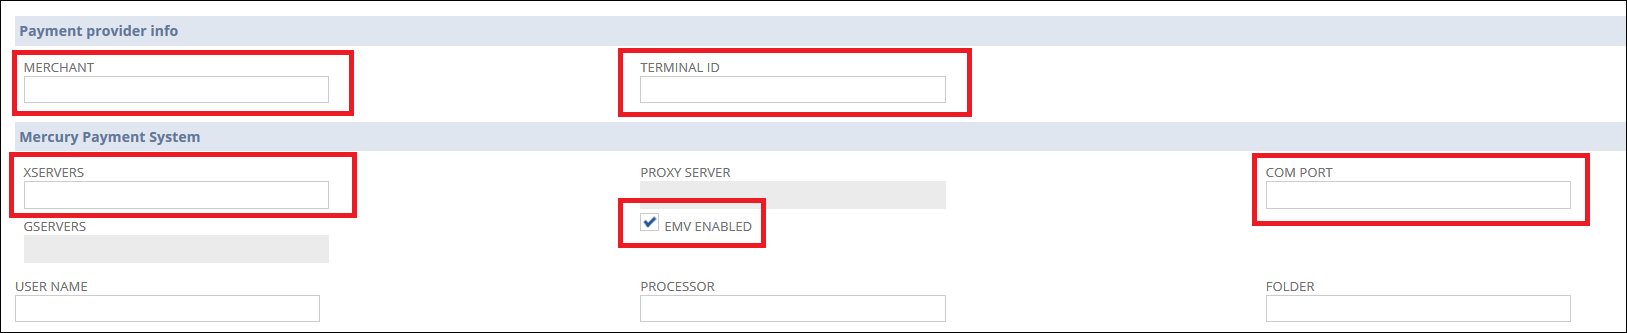 RA-Workstation form for Worldpay (Vantiv) EMV payment gateway.